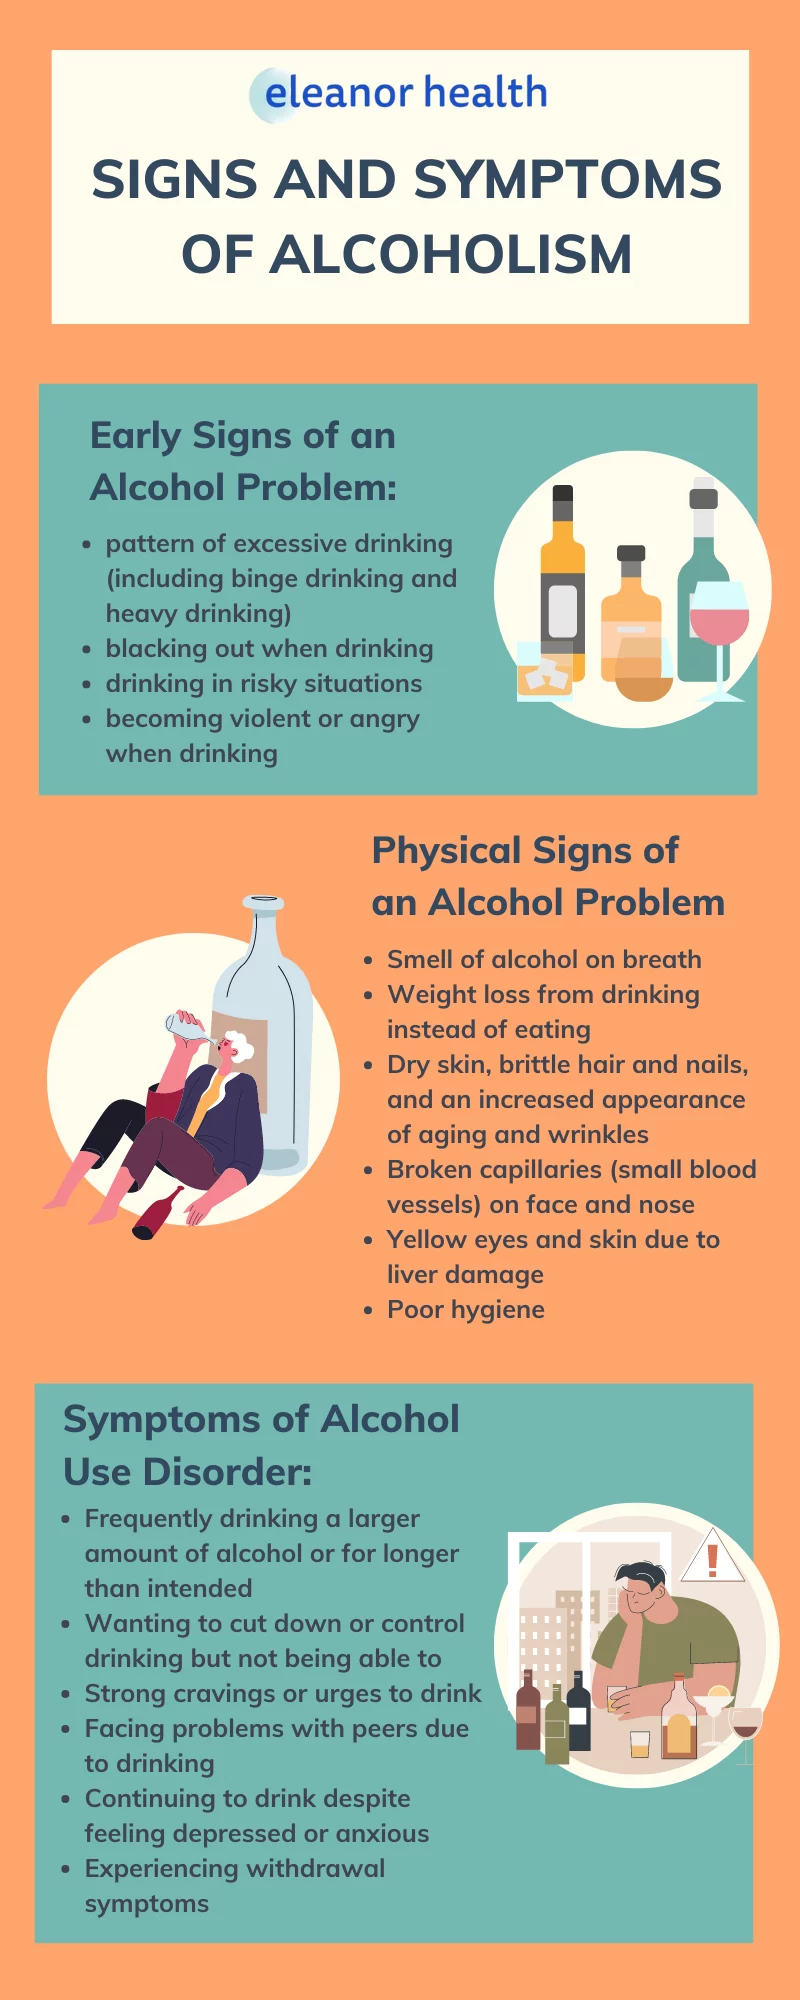 https://www.eleanorhealth.com/wp-content/uploads/2021/03/signs-symptoms-alcoholism-info.png